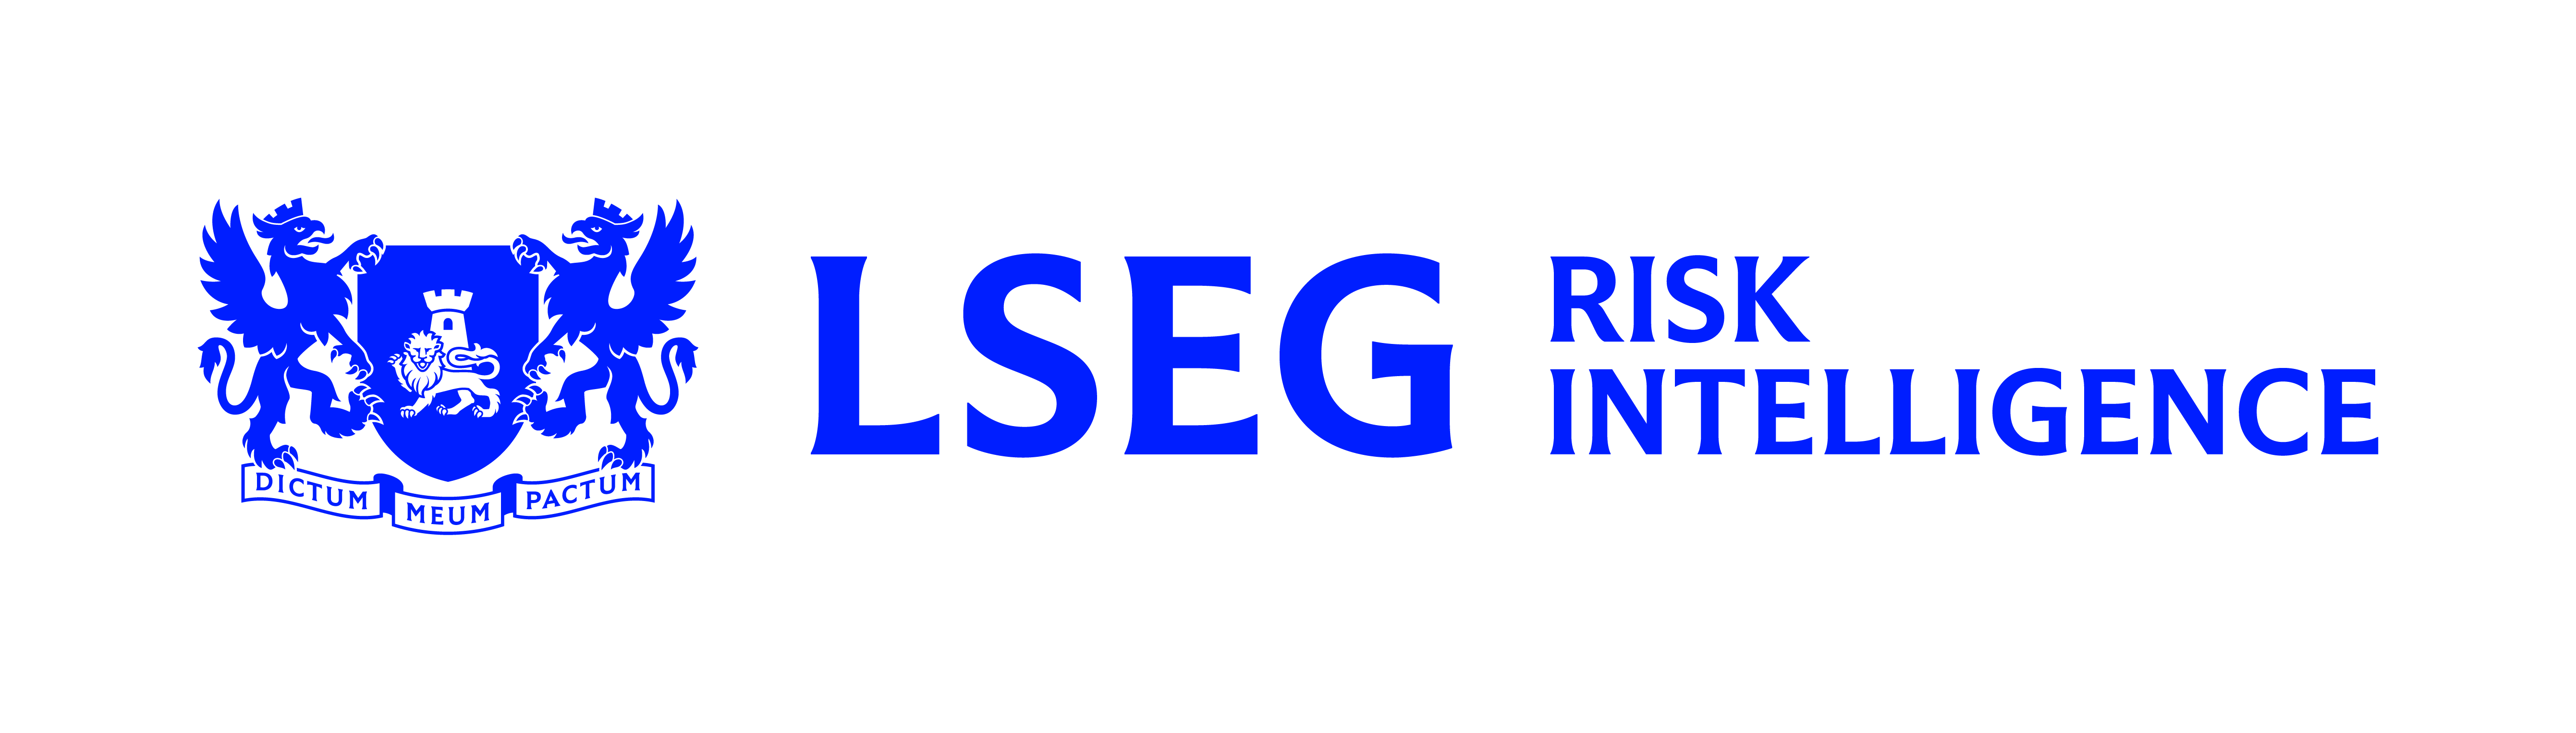 LSEG Risk Intelligence Logo